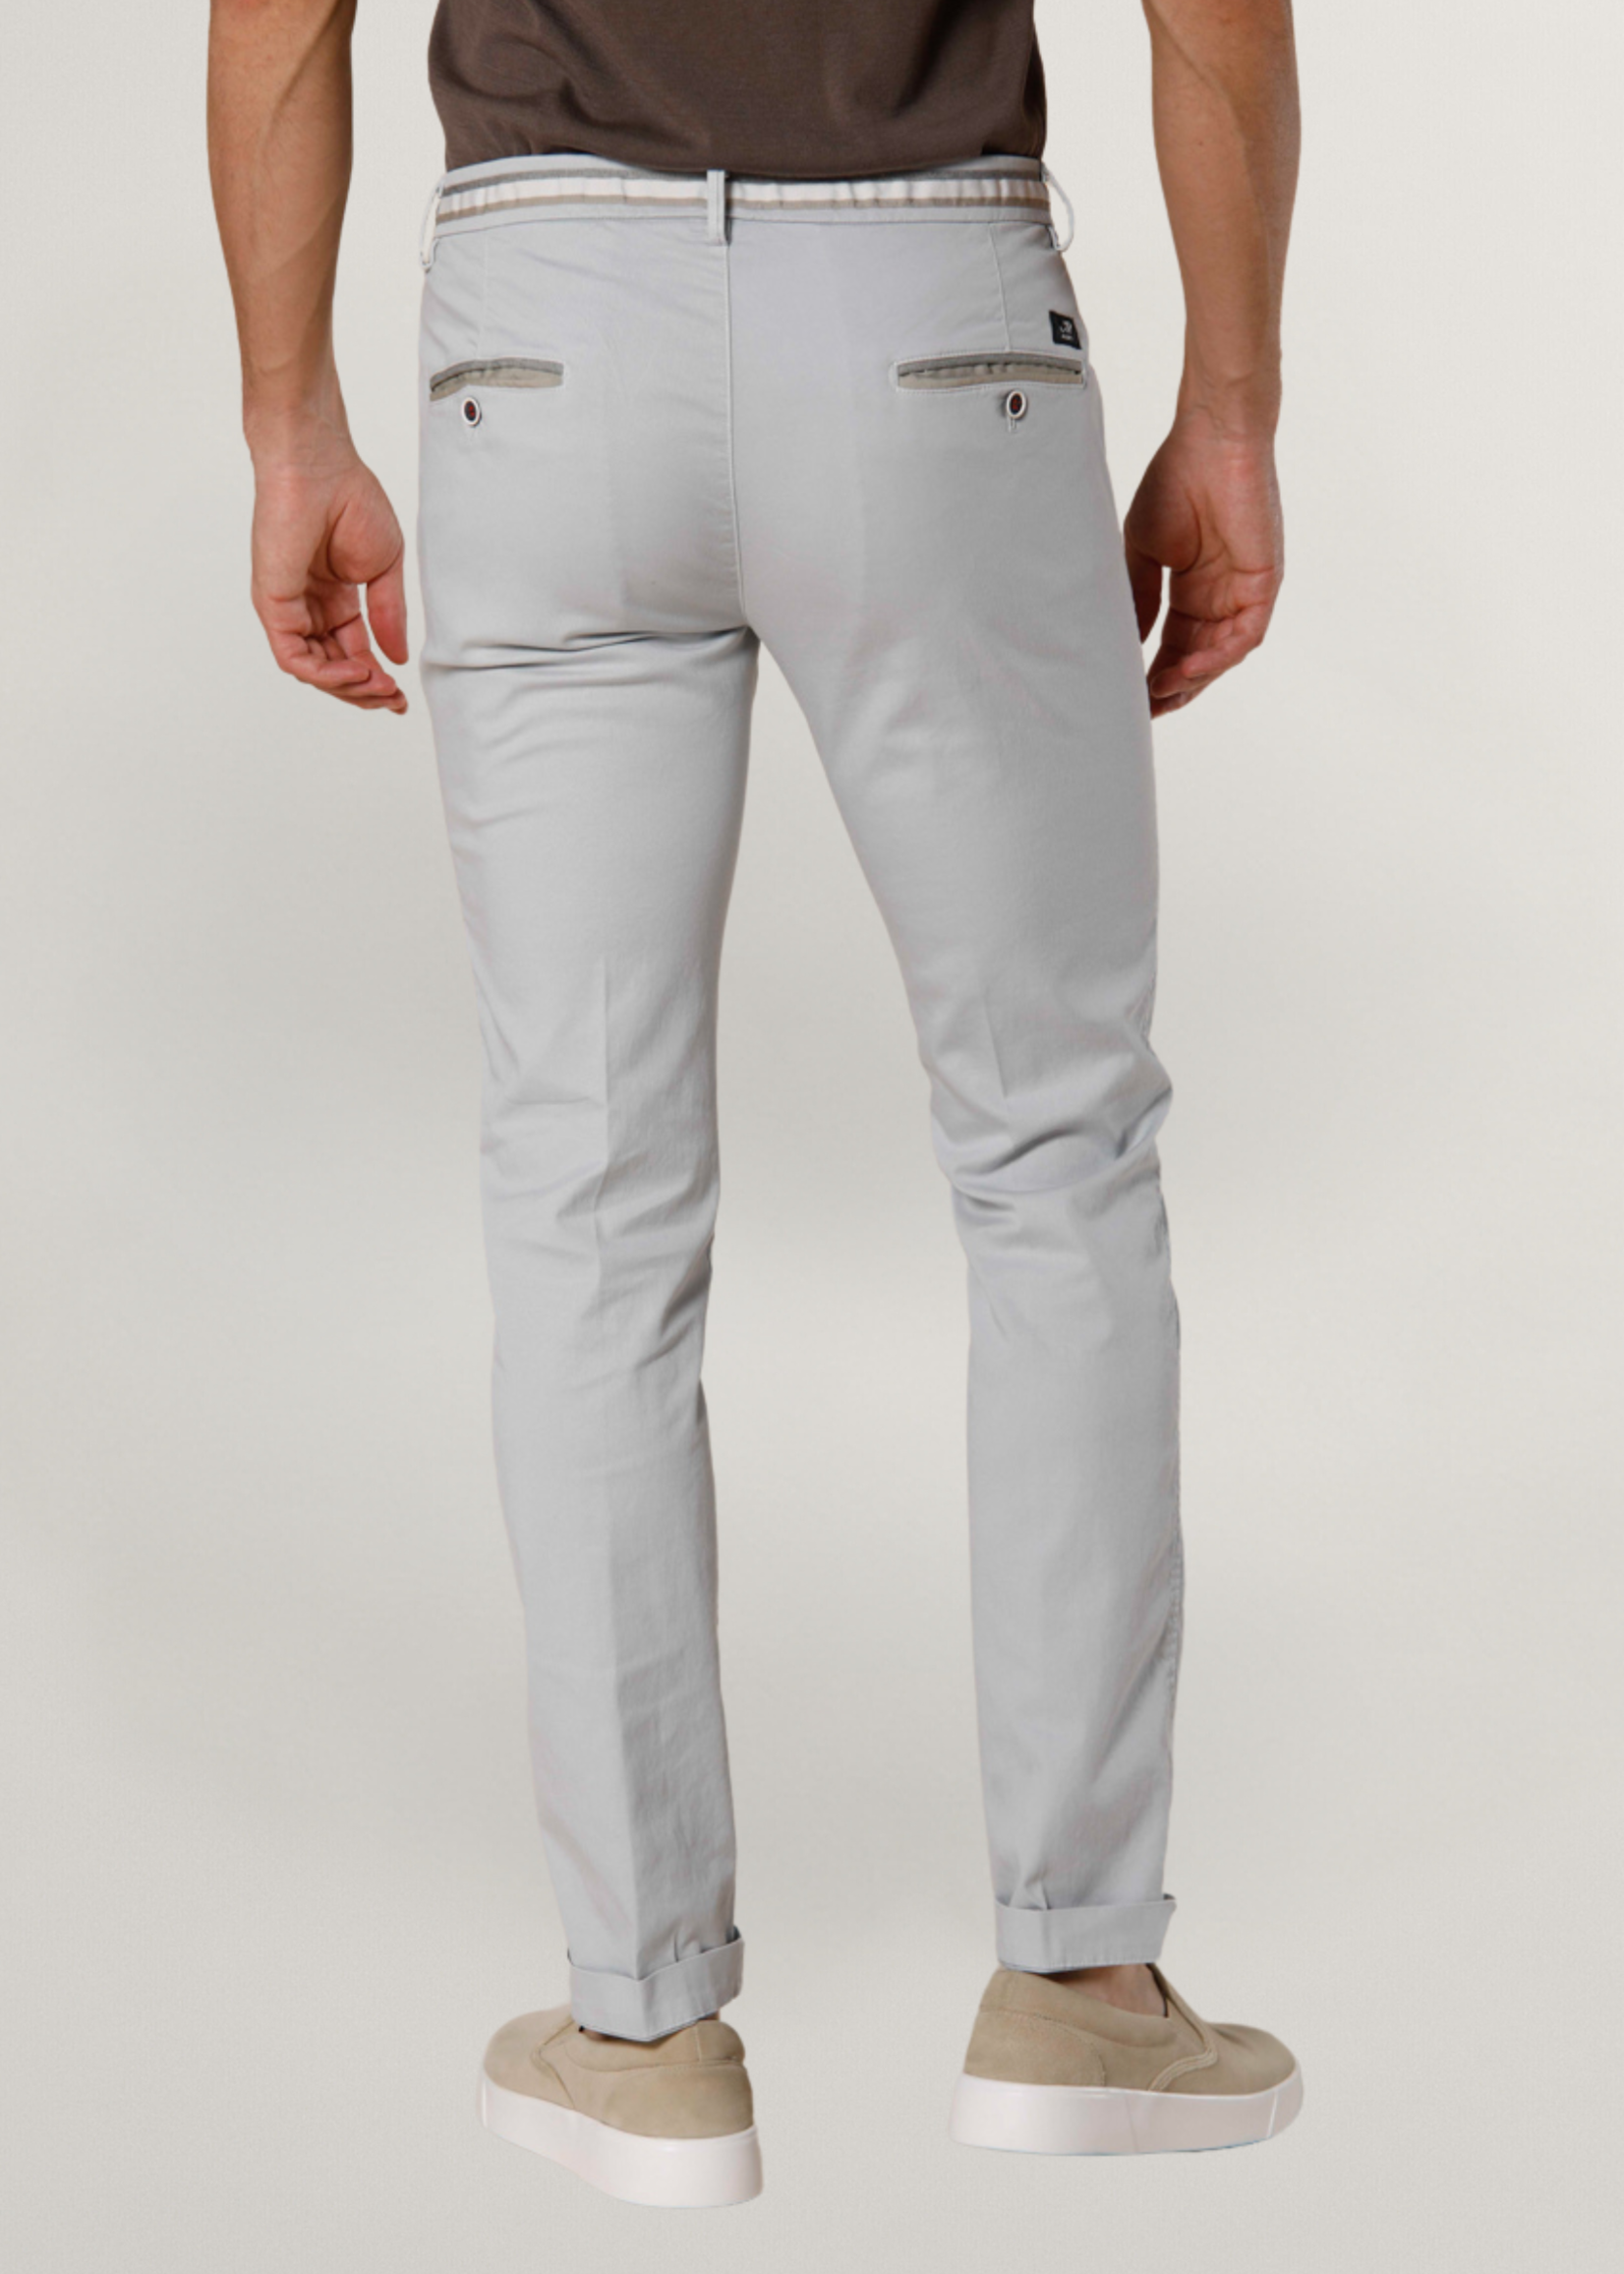 MASON'S Torino Summer pantalon chino homme en coton et tencel avec rubans slim - Gris clair